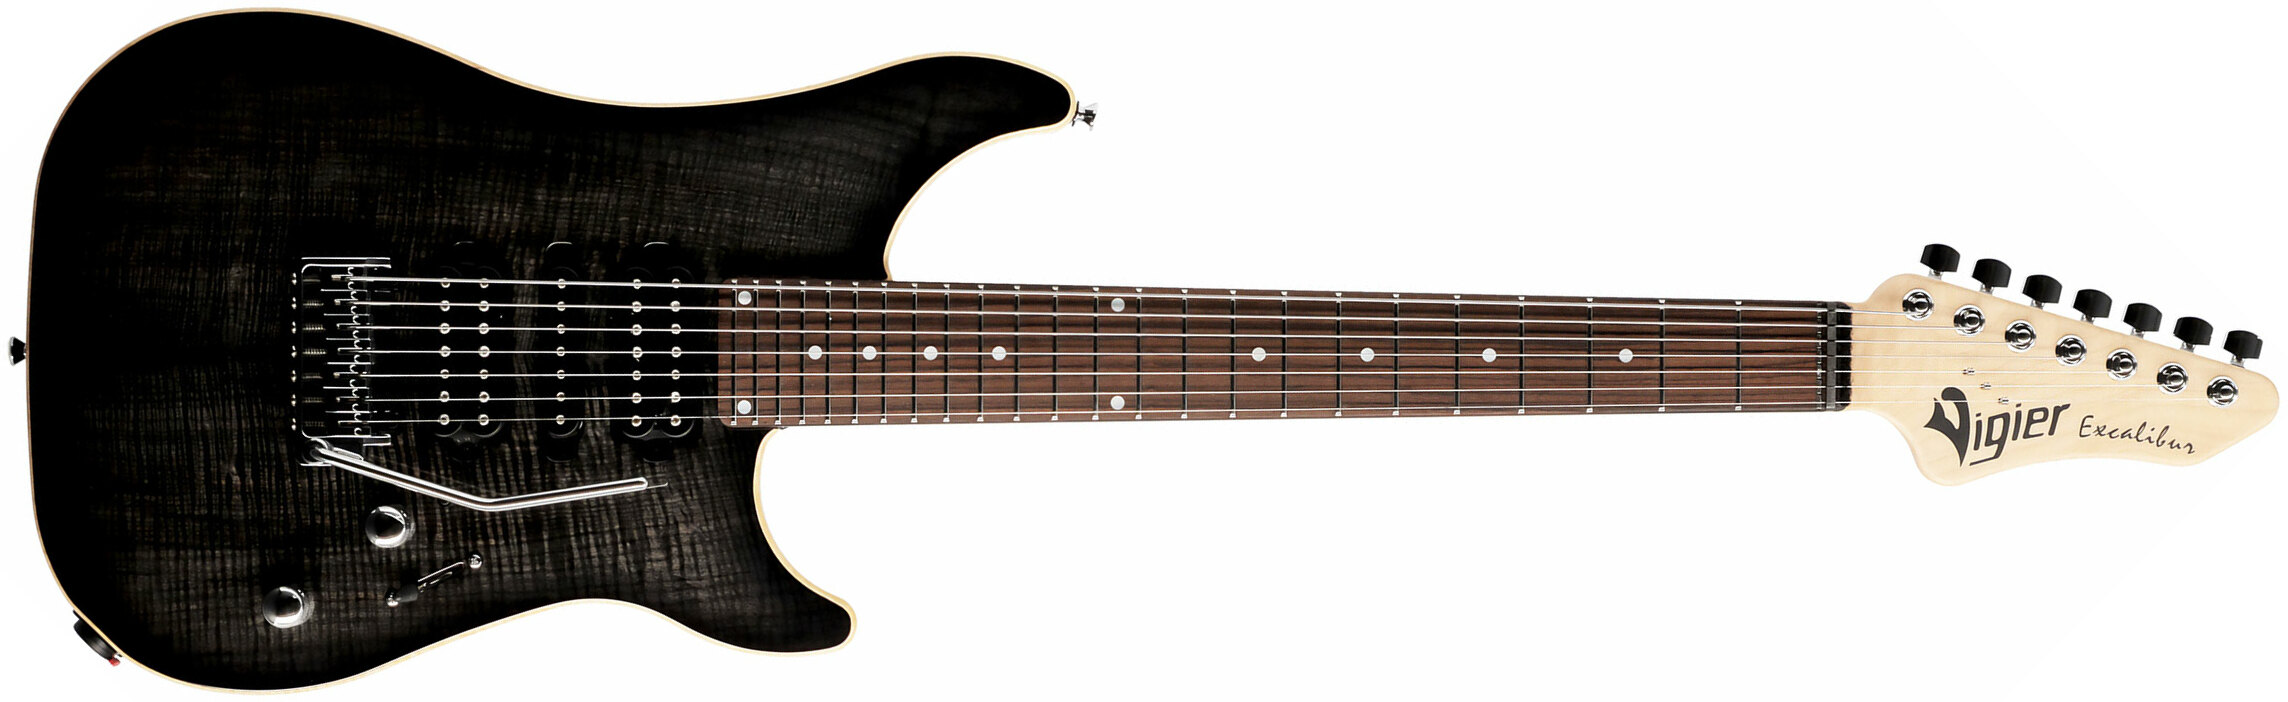 Vigier Excalibur Special 7 Hsh Trem Rw - Mysterious Black - 7-snarige elektrische gitaar - Main picture